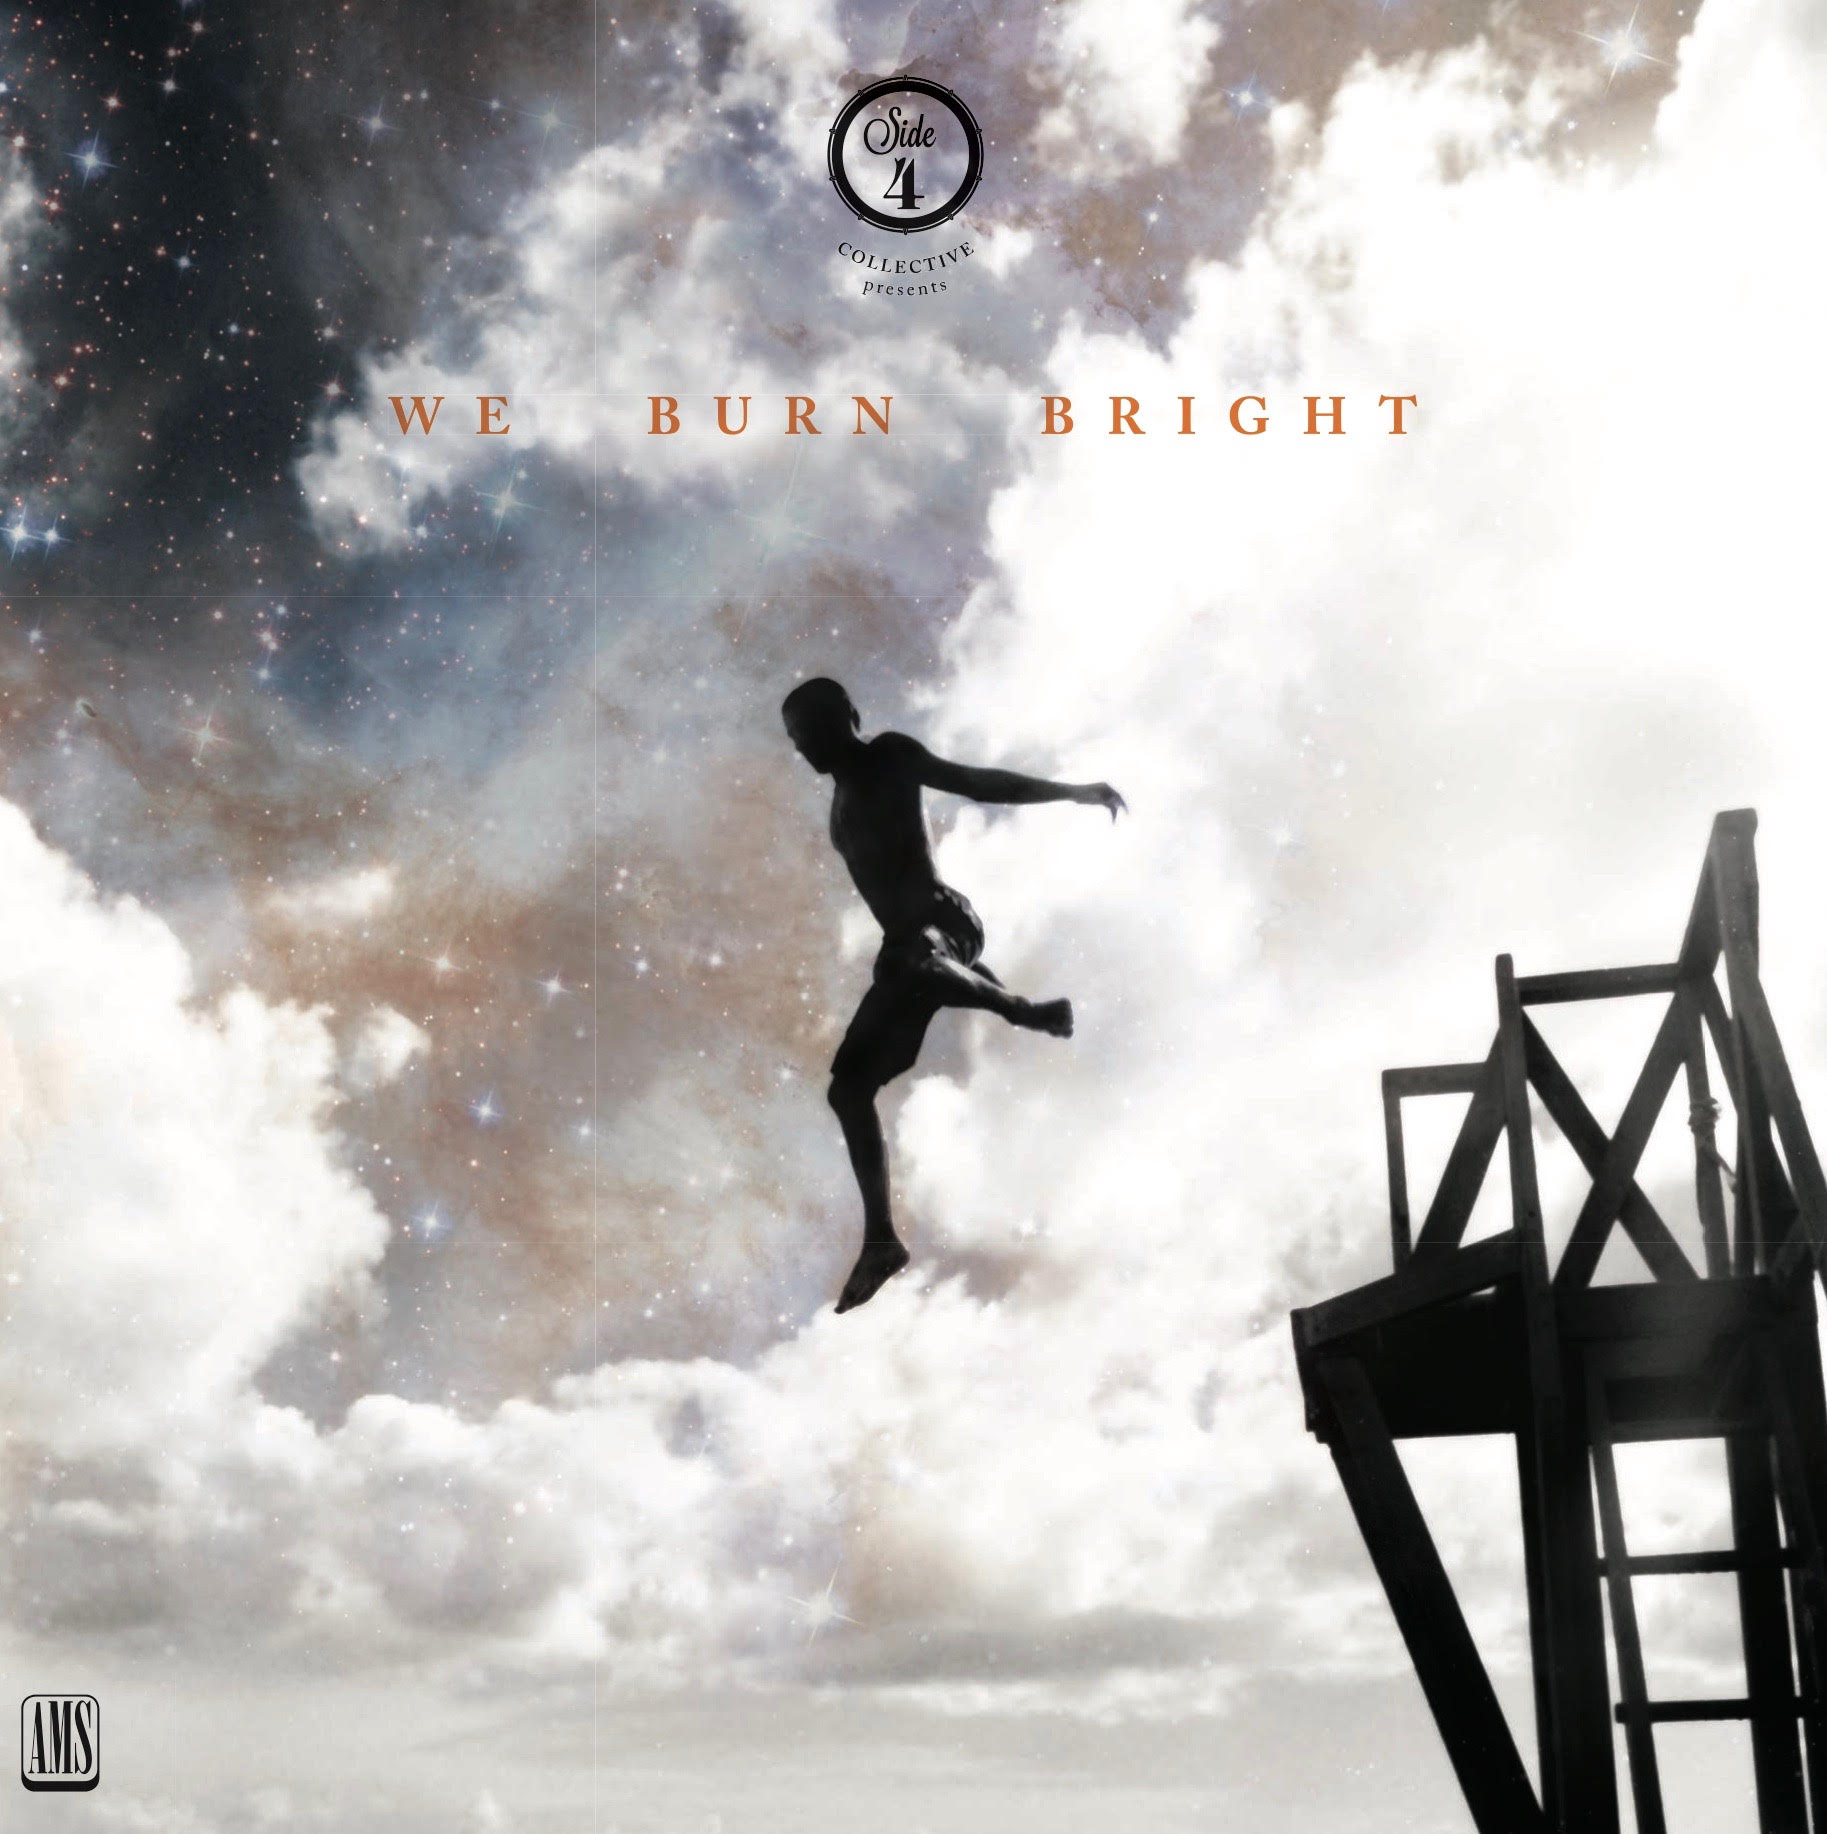 We Burn Bright - Side 4 - Dave Hingerty